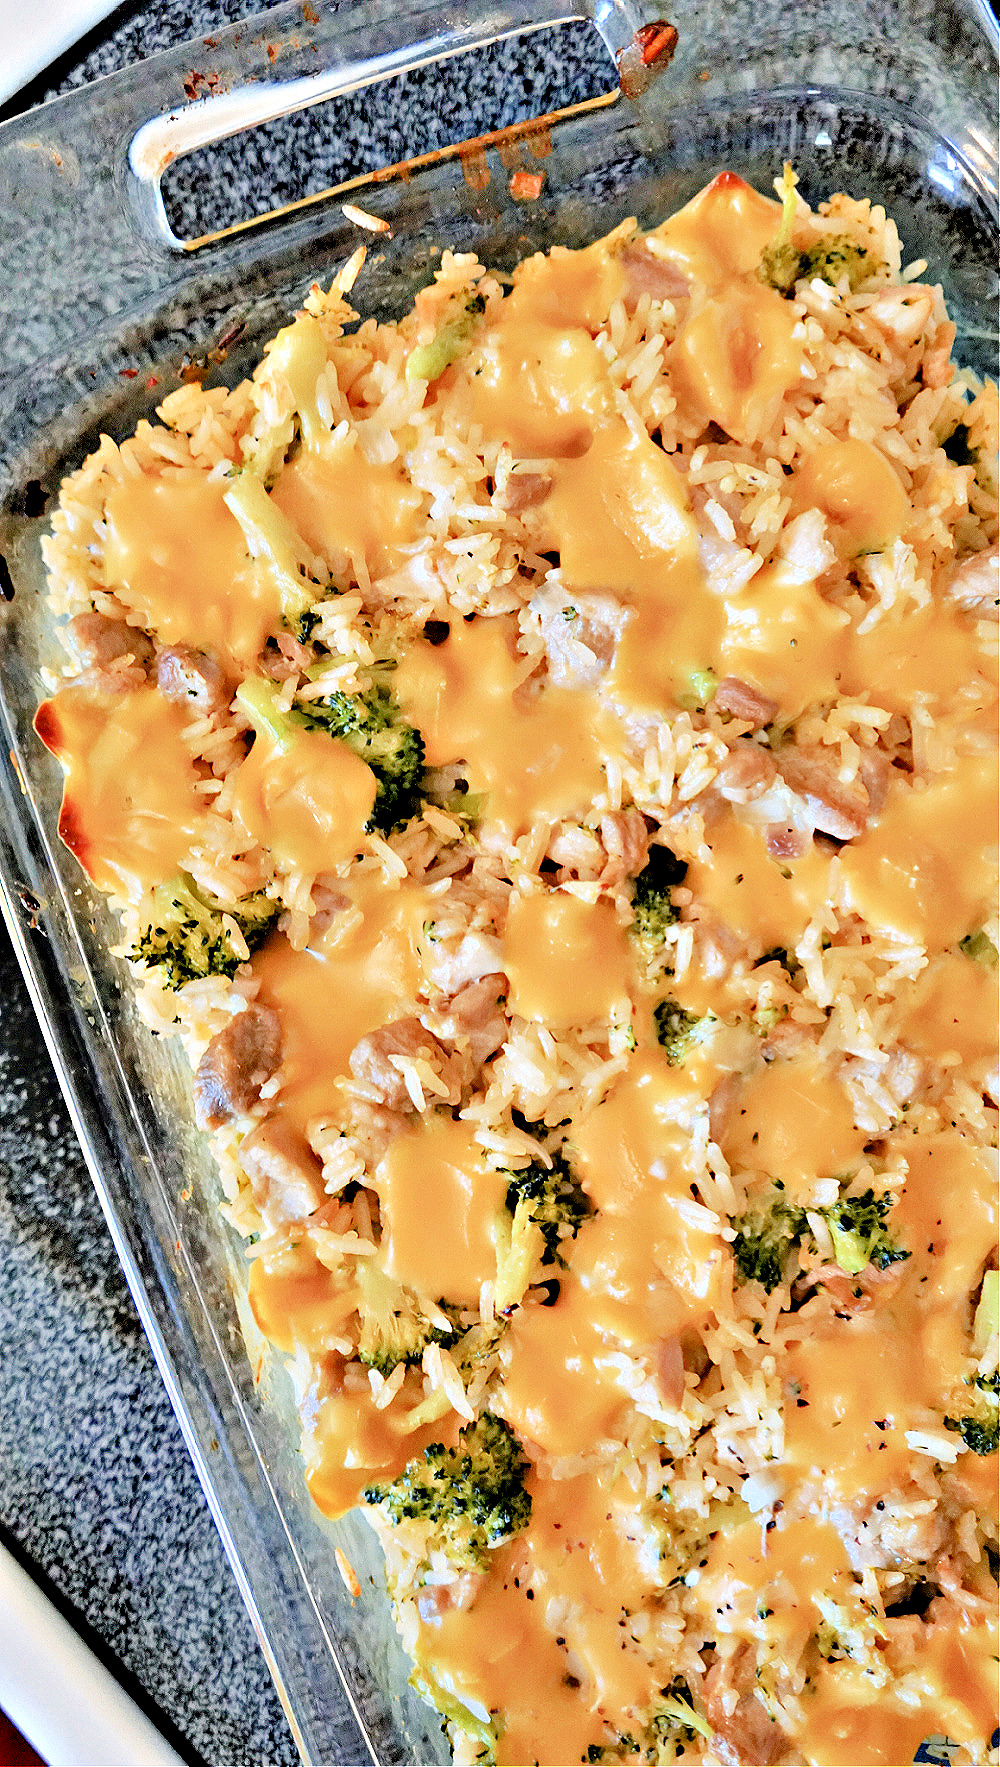 Velveeta Cheesy Broccoli & Chicken Casserole With Rice Recipe